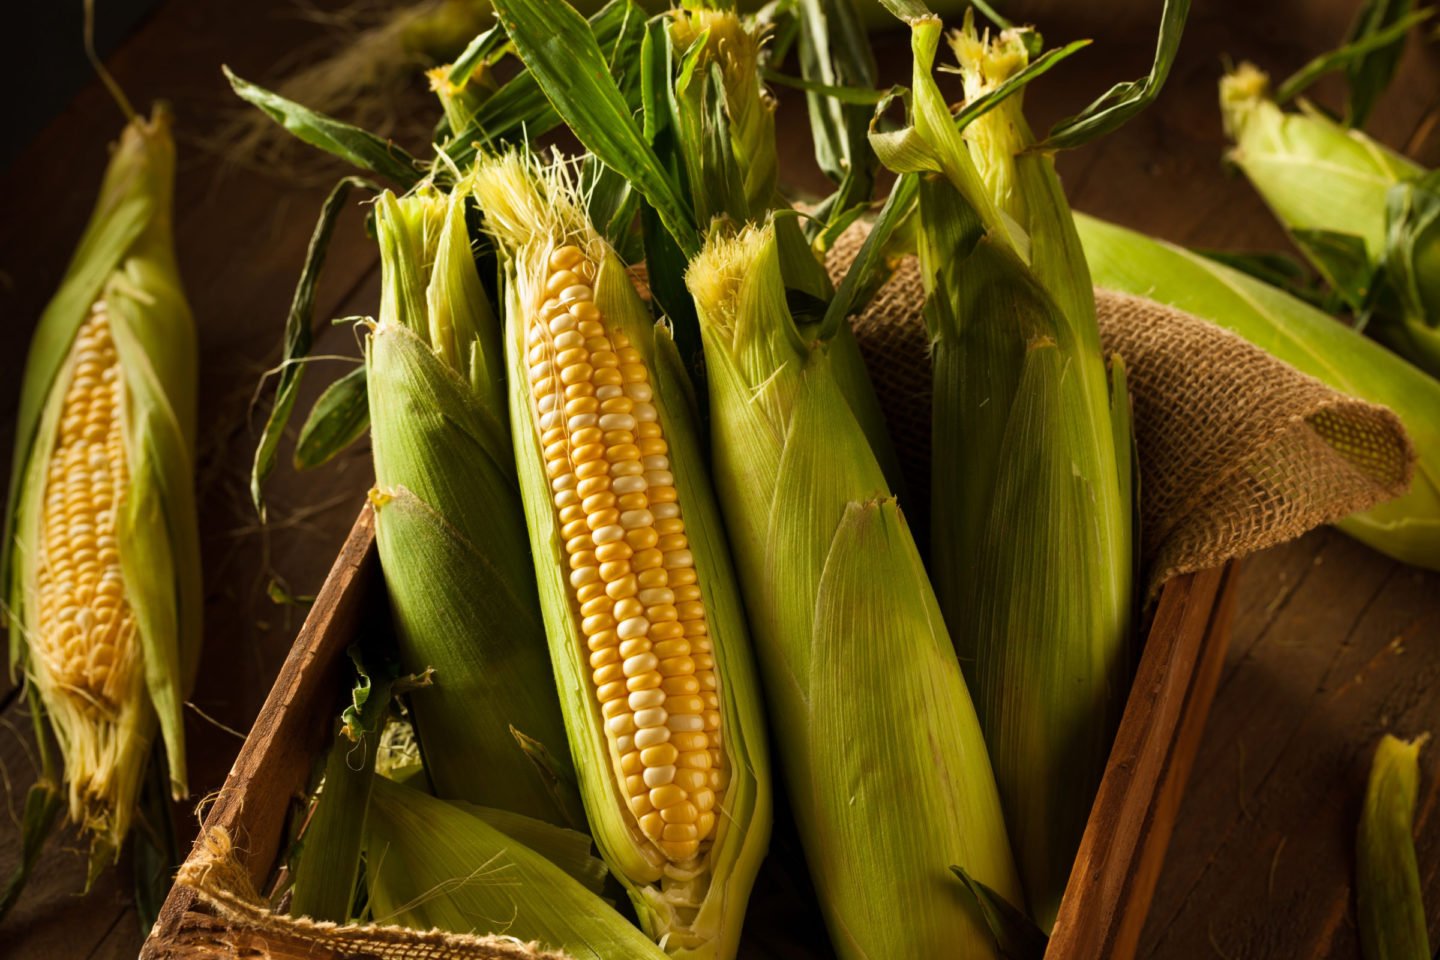 corn harvest in a box